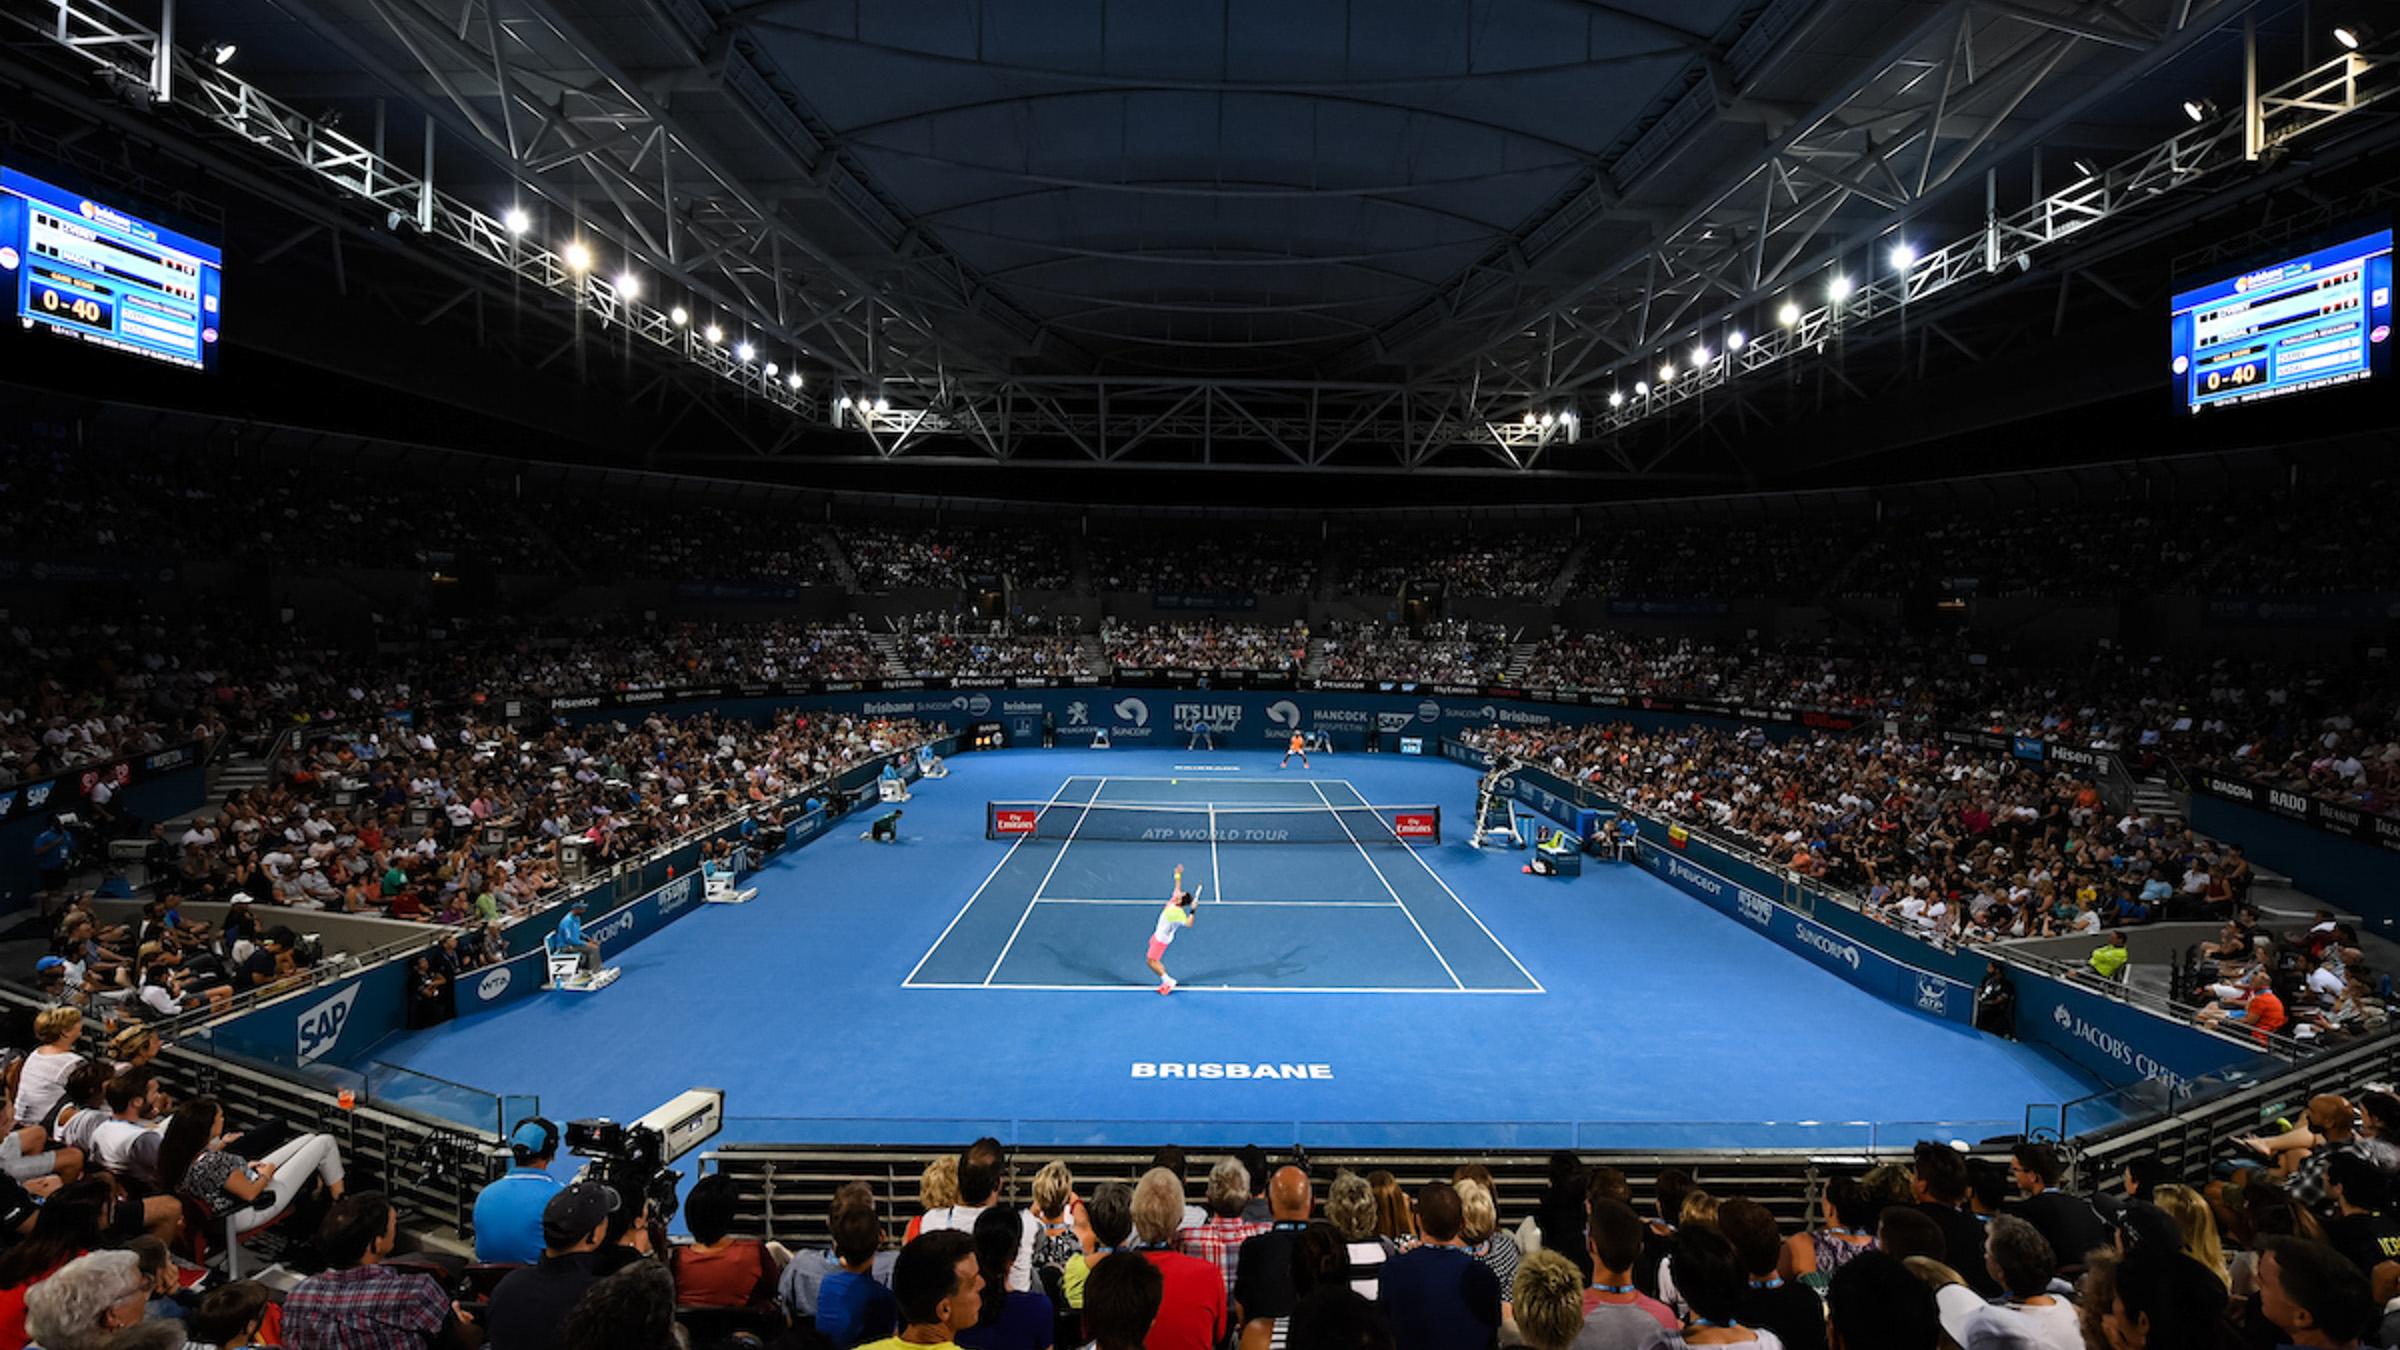 Indoor tennis game in the Queensland tennis stadium filled with people watching